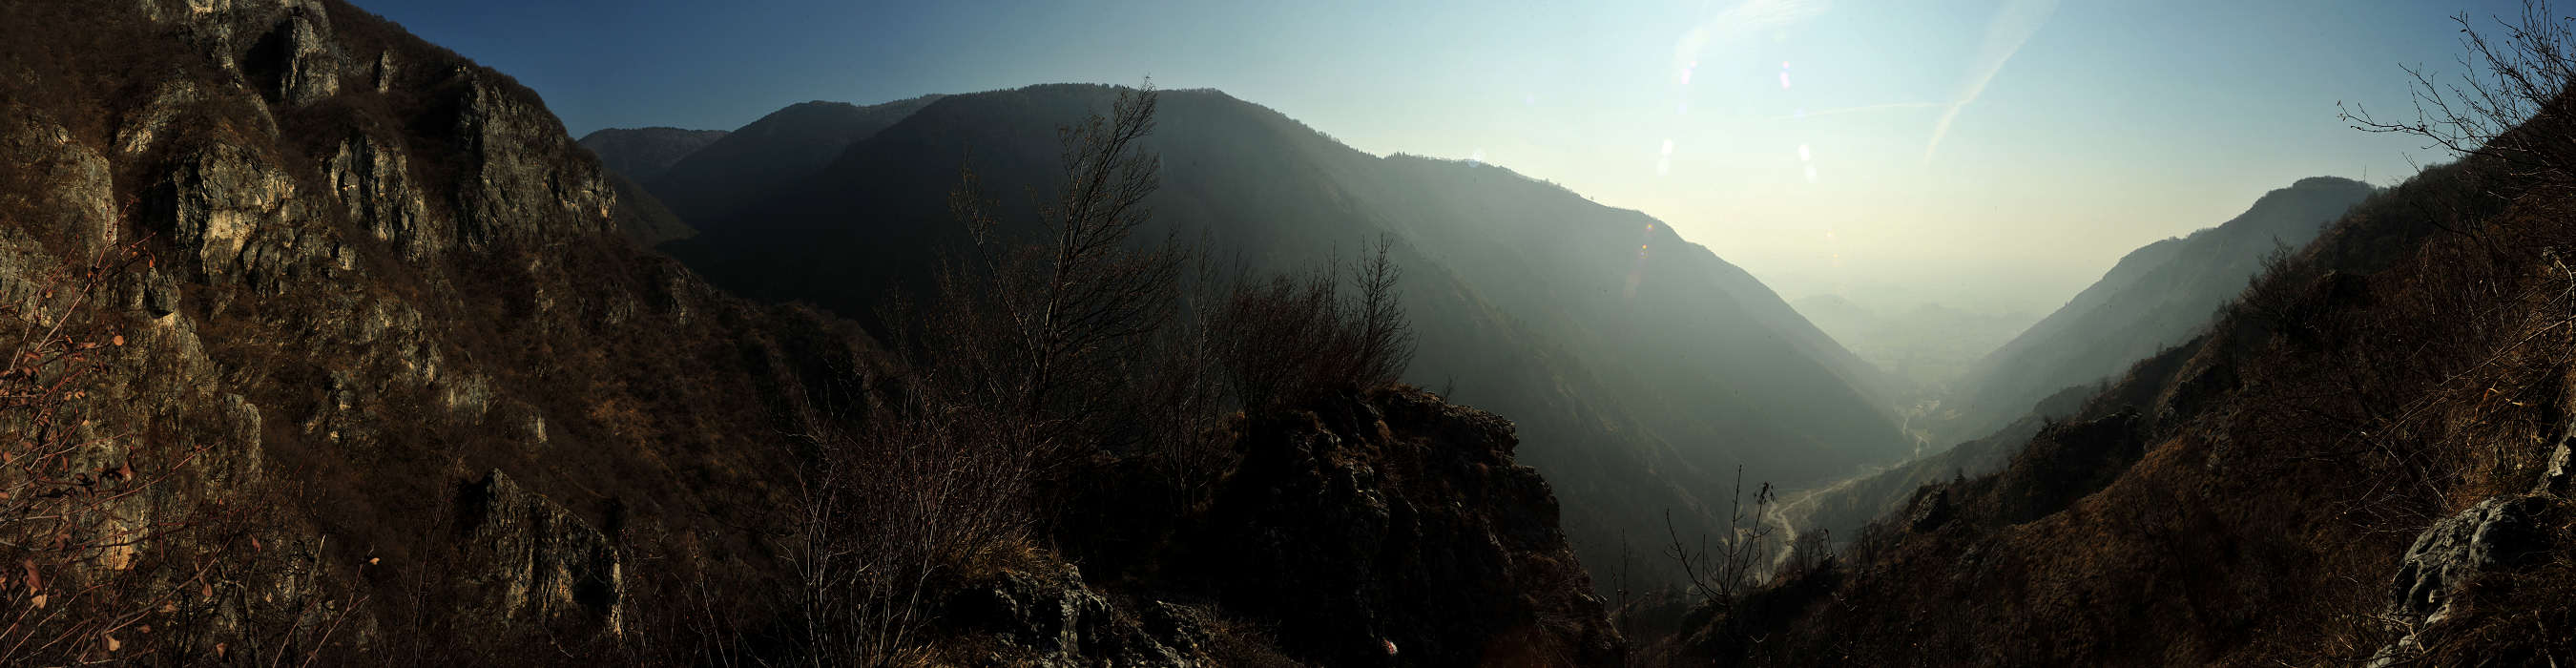 Valle Santa Felicita, sent.53 di Val Noselari - fotografia panoramica